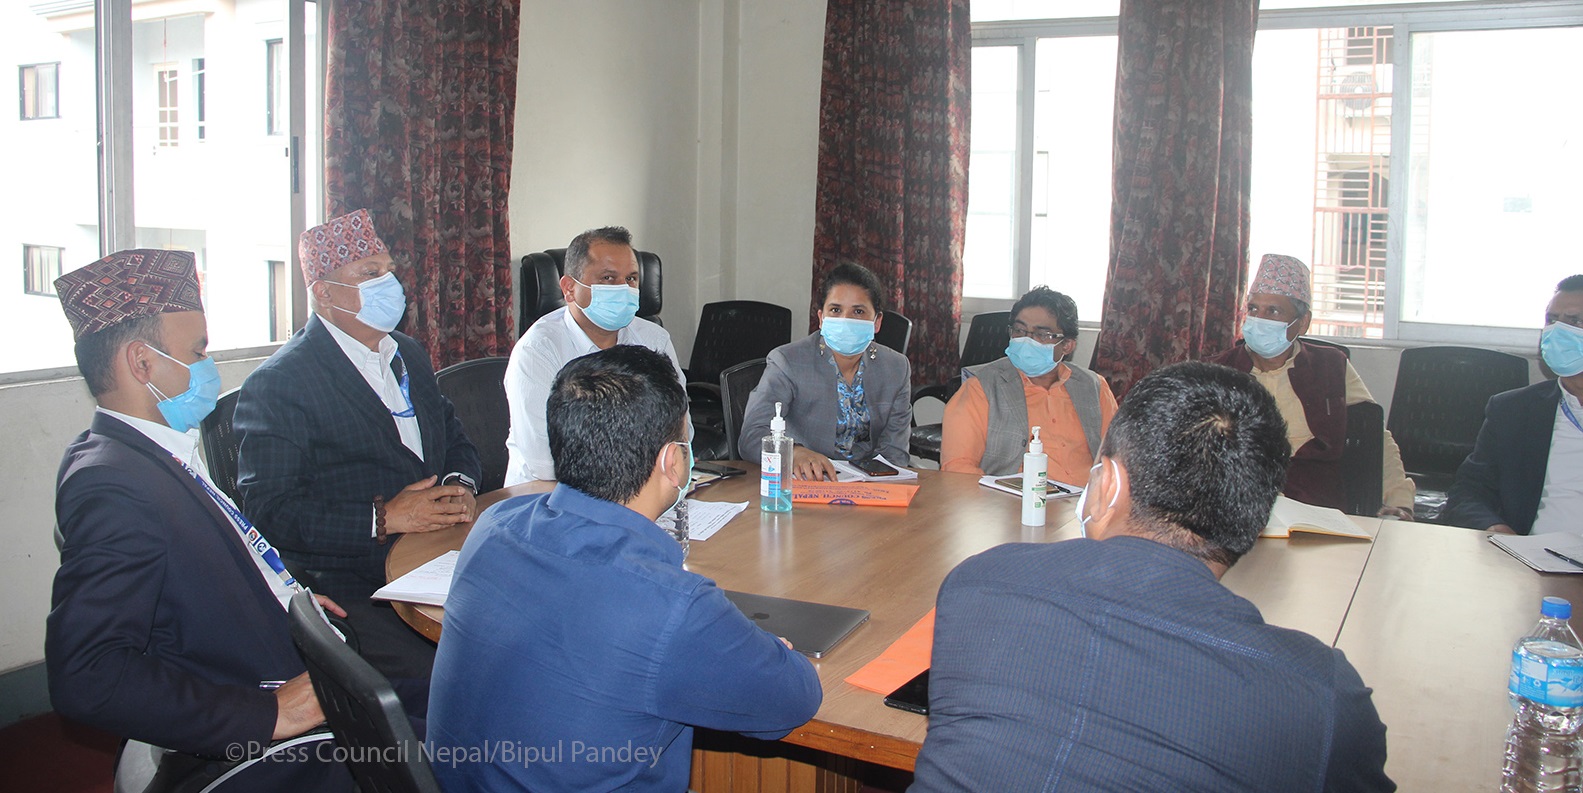 Nepal press council coordinate social networking management meetup